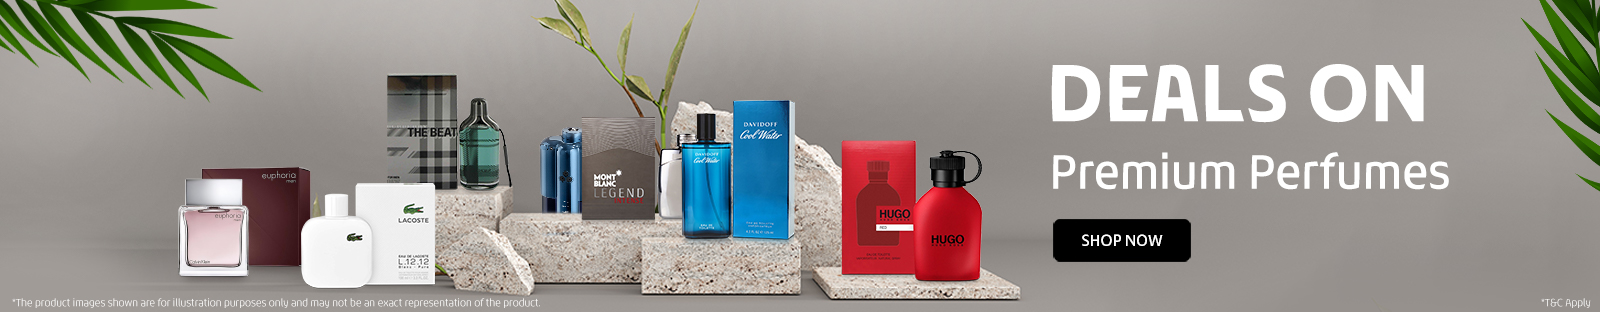 Deals-on-Premium-Perfumes-1600x312.jpg